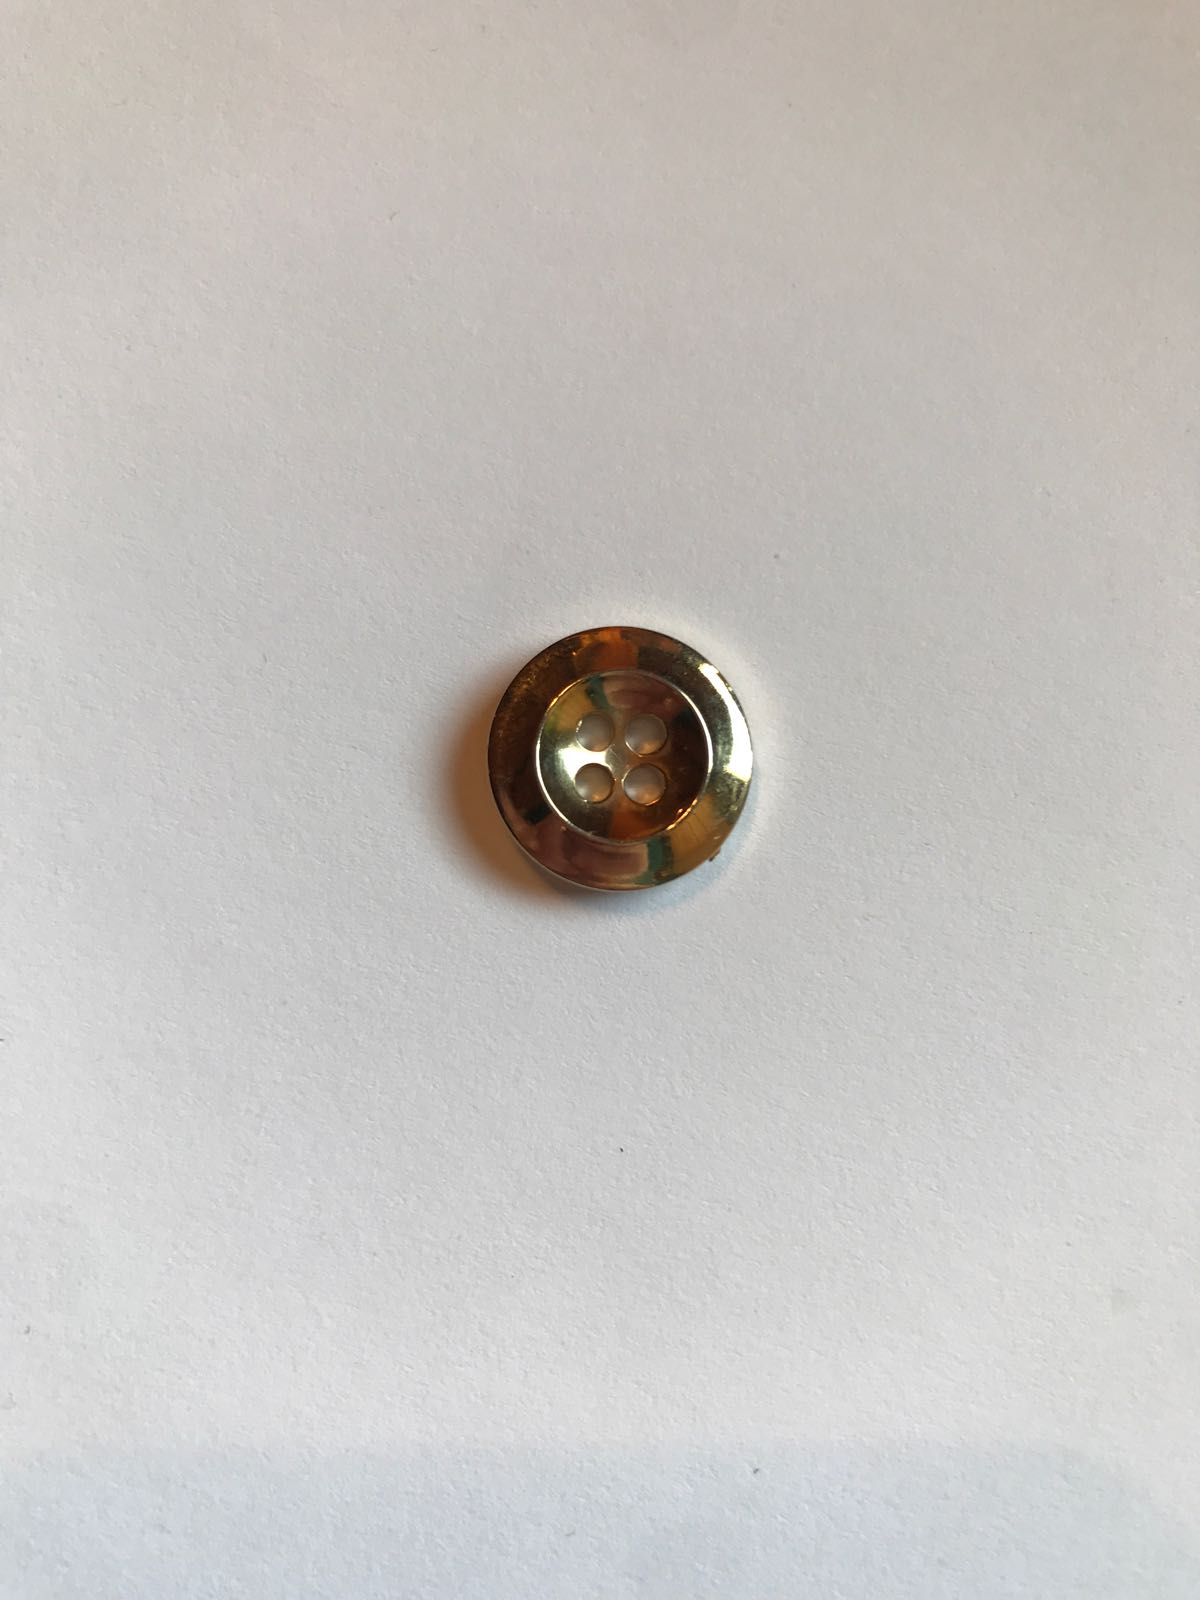 Gold button 15 mm